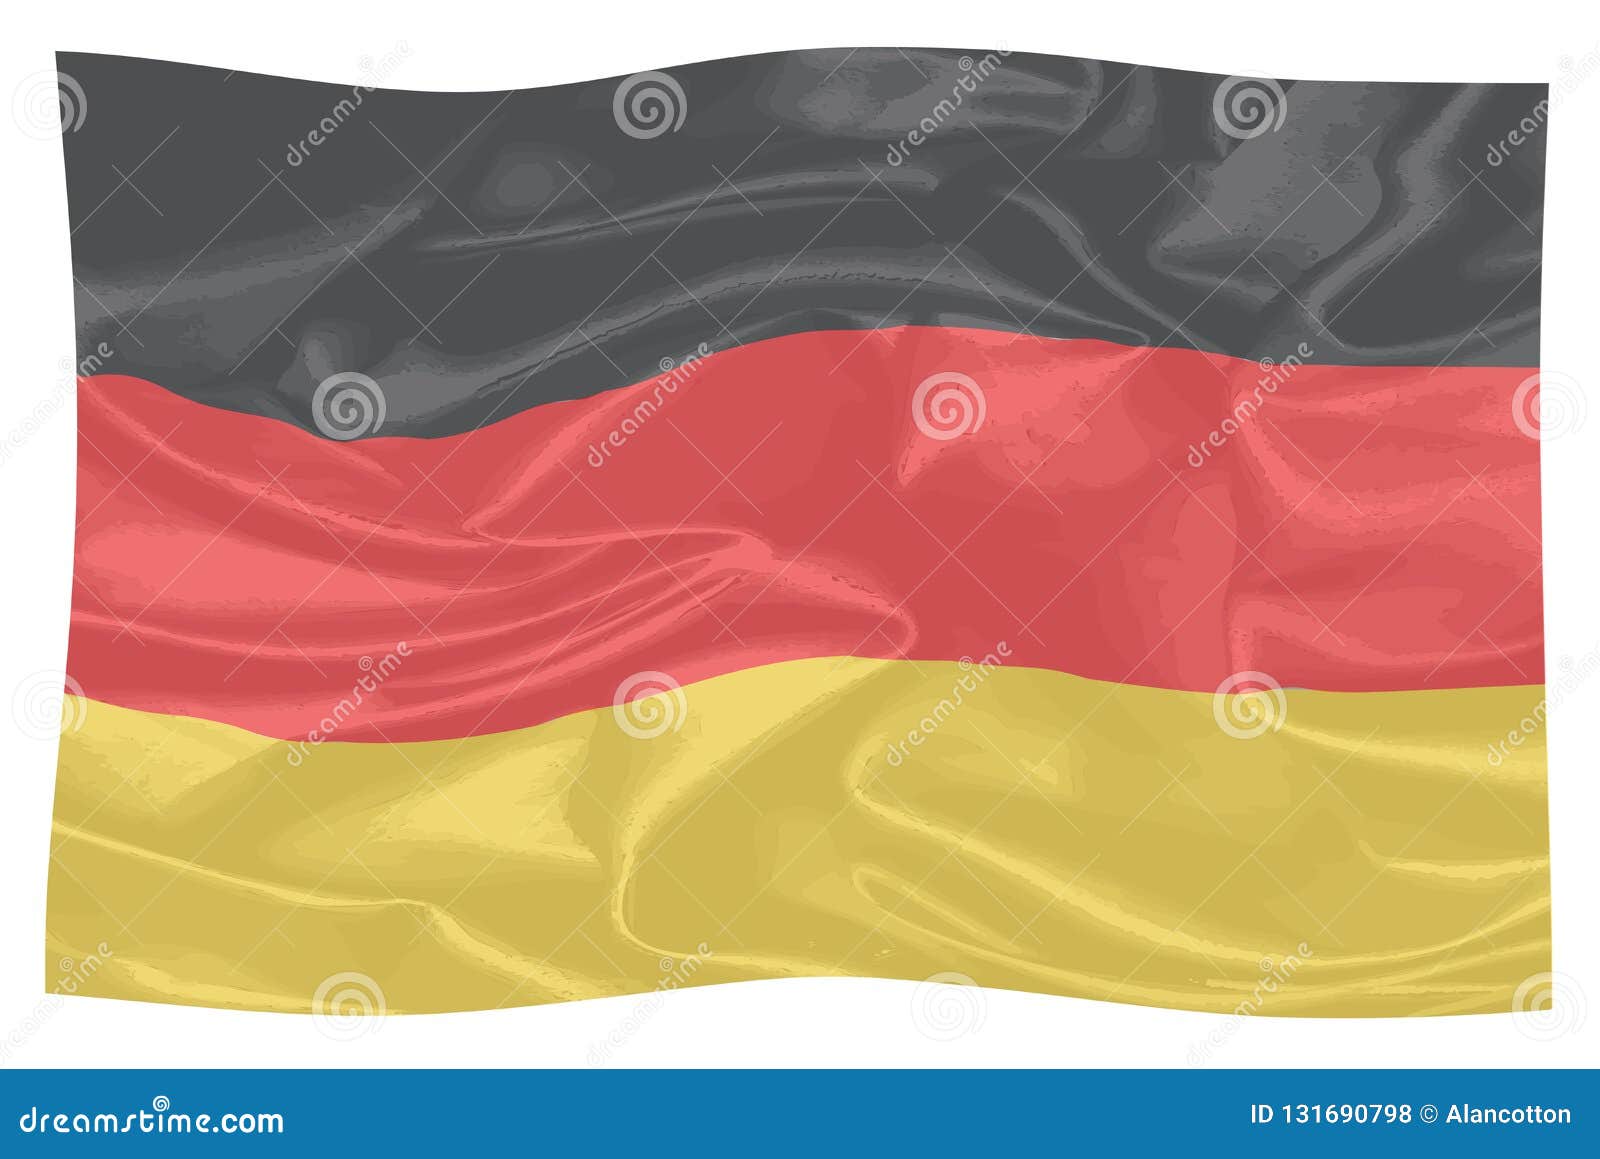 The flag of Germany stock illustration. Illustration of gold - 131690798